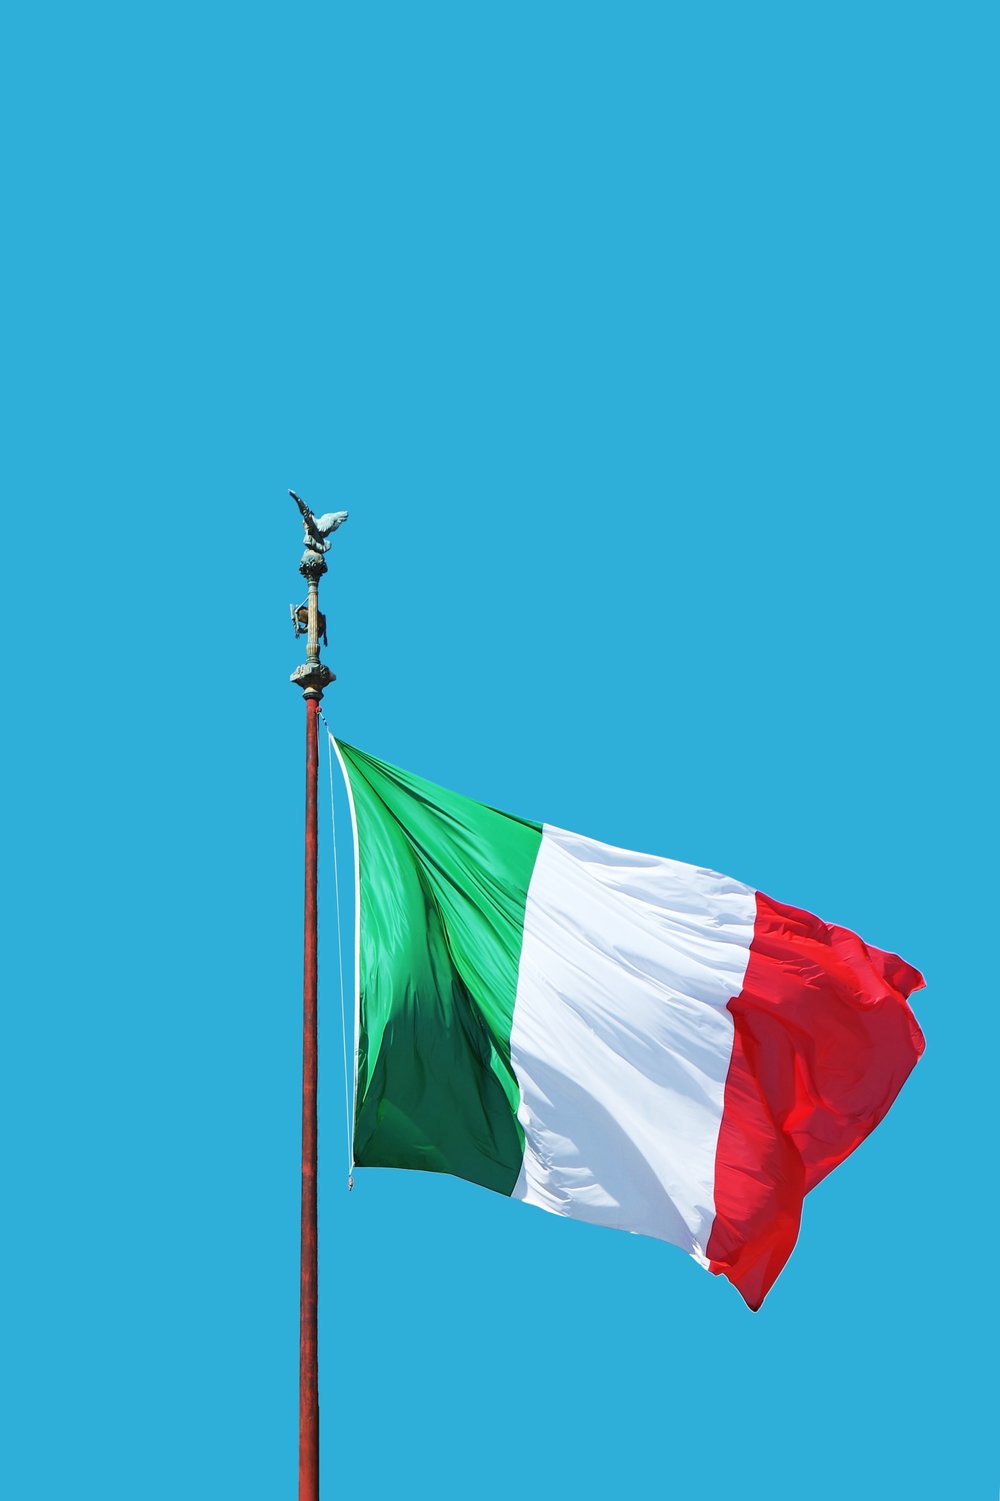 the Italian flag waving in the wind